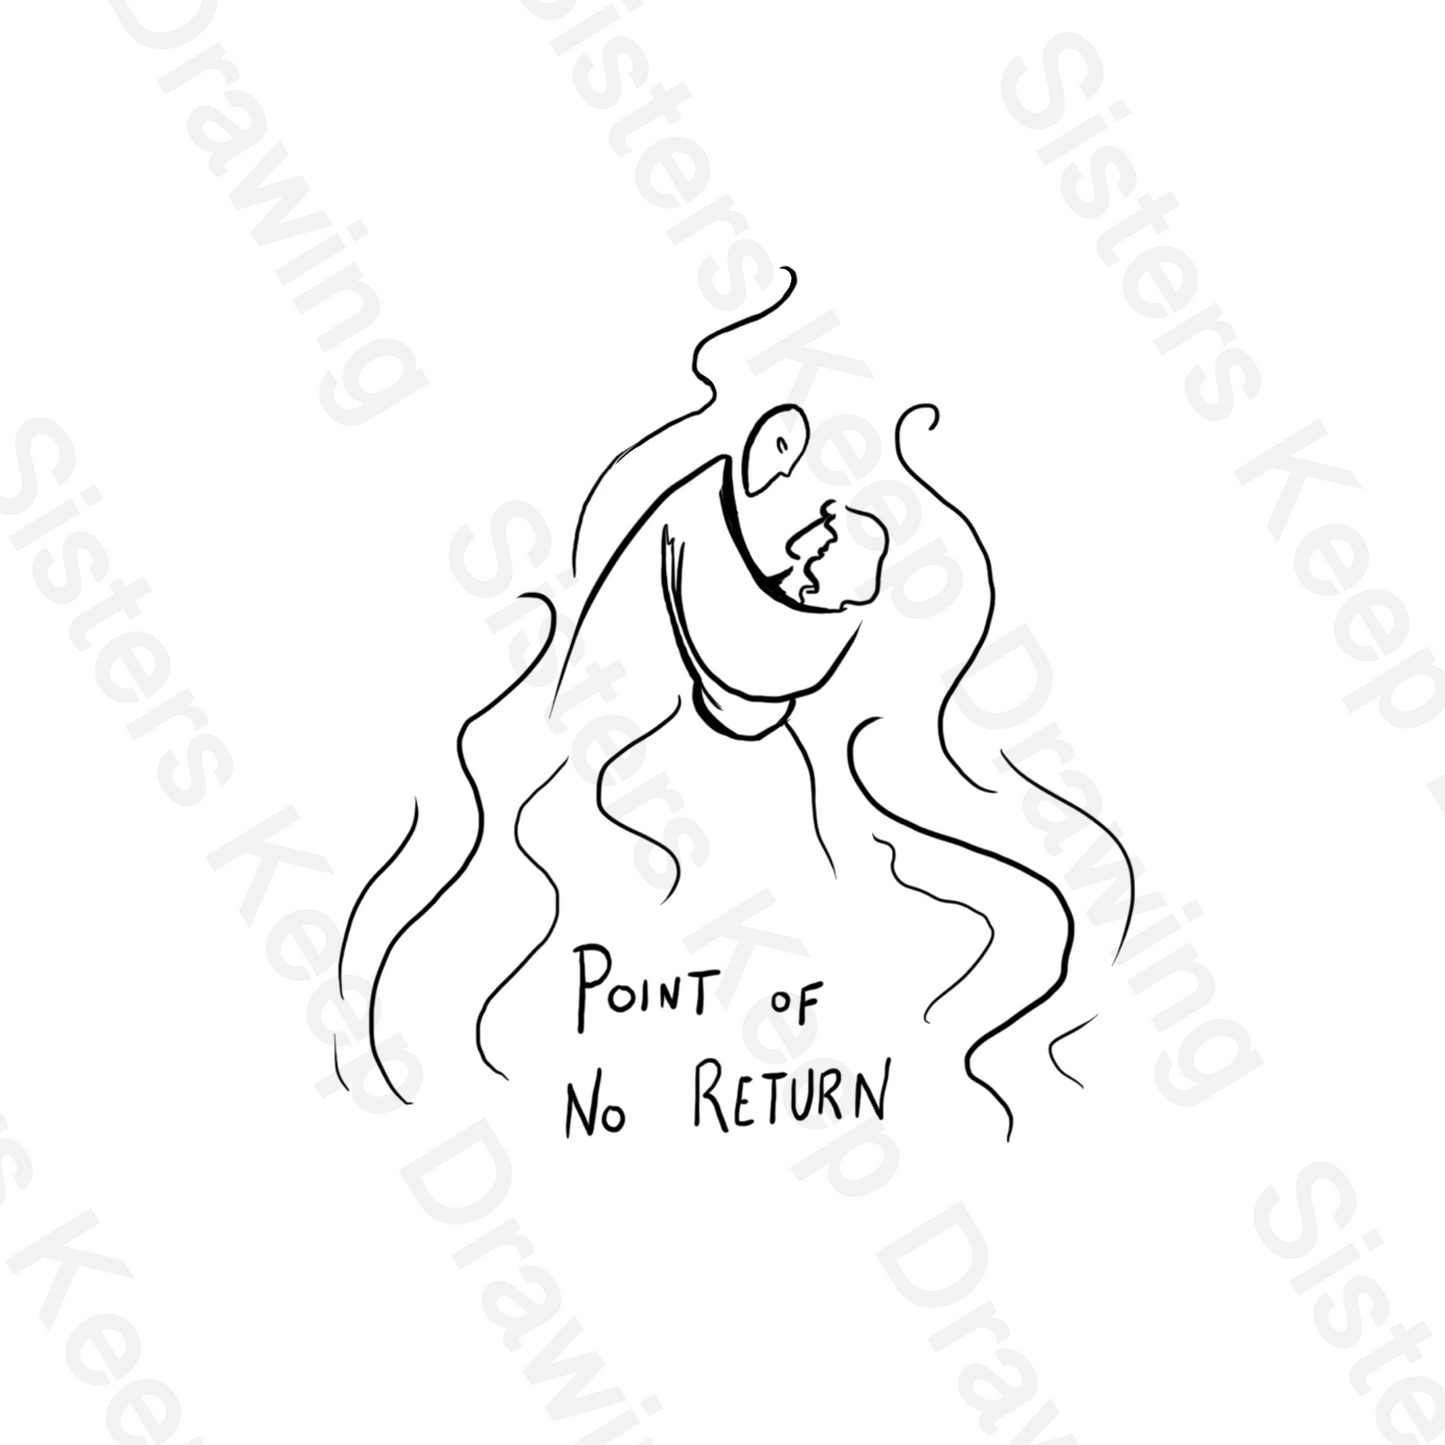 Point of No Return - Phantom Inspired Tattoo Transparent Permission PNG- instant download digital printable artwork